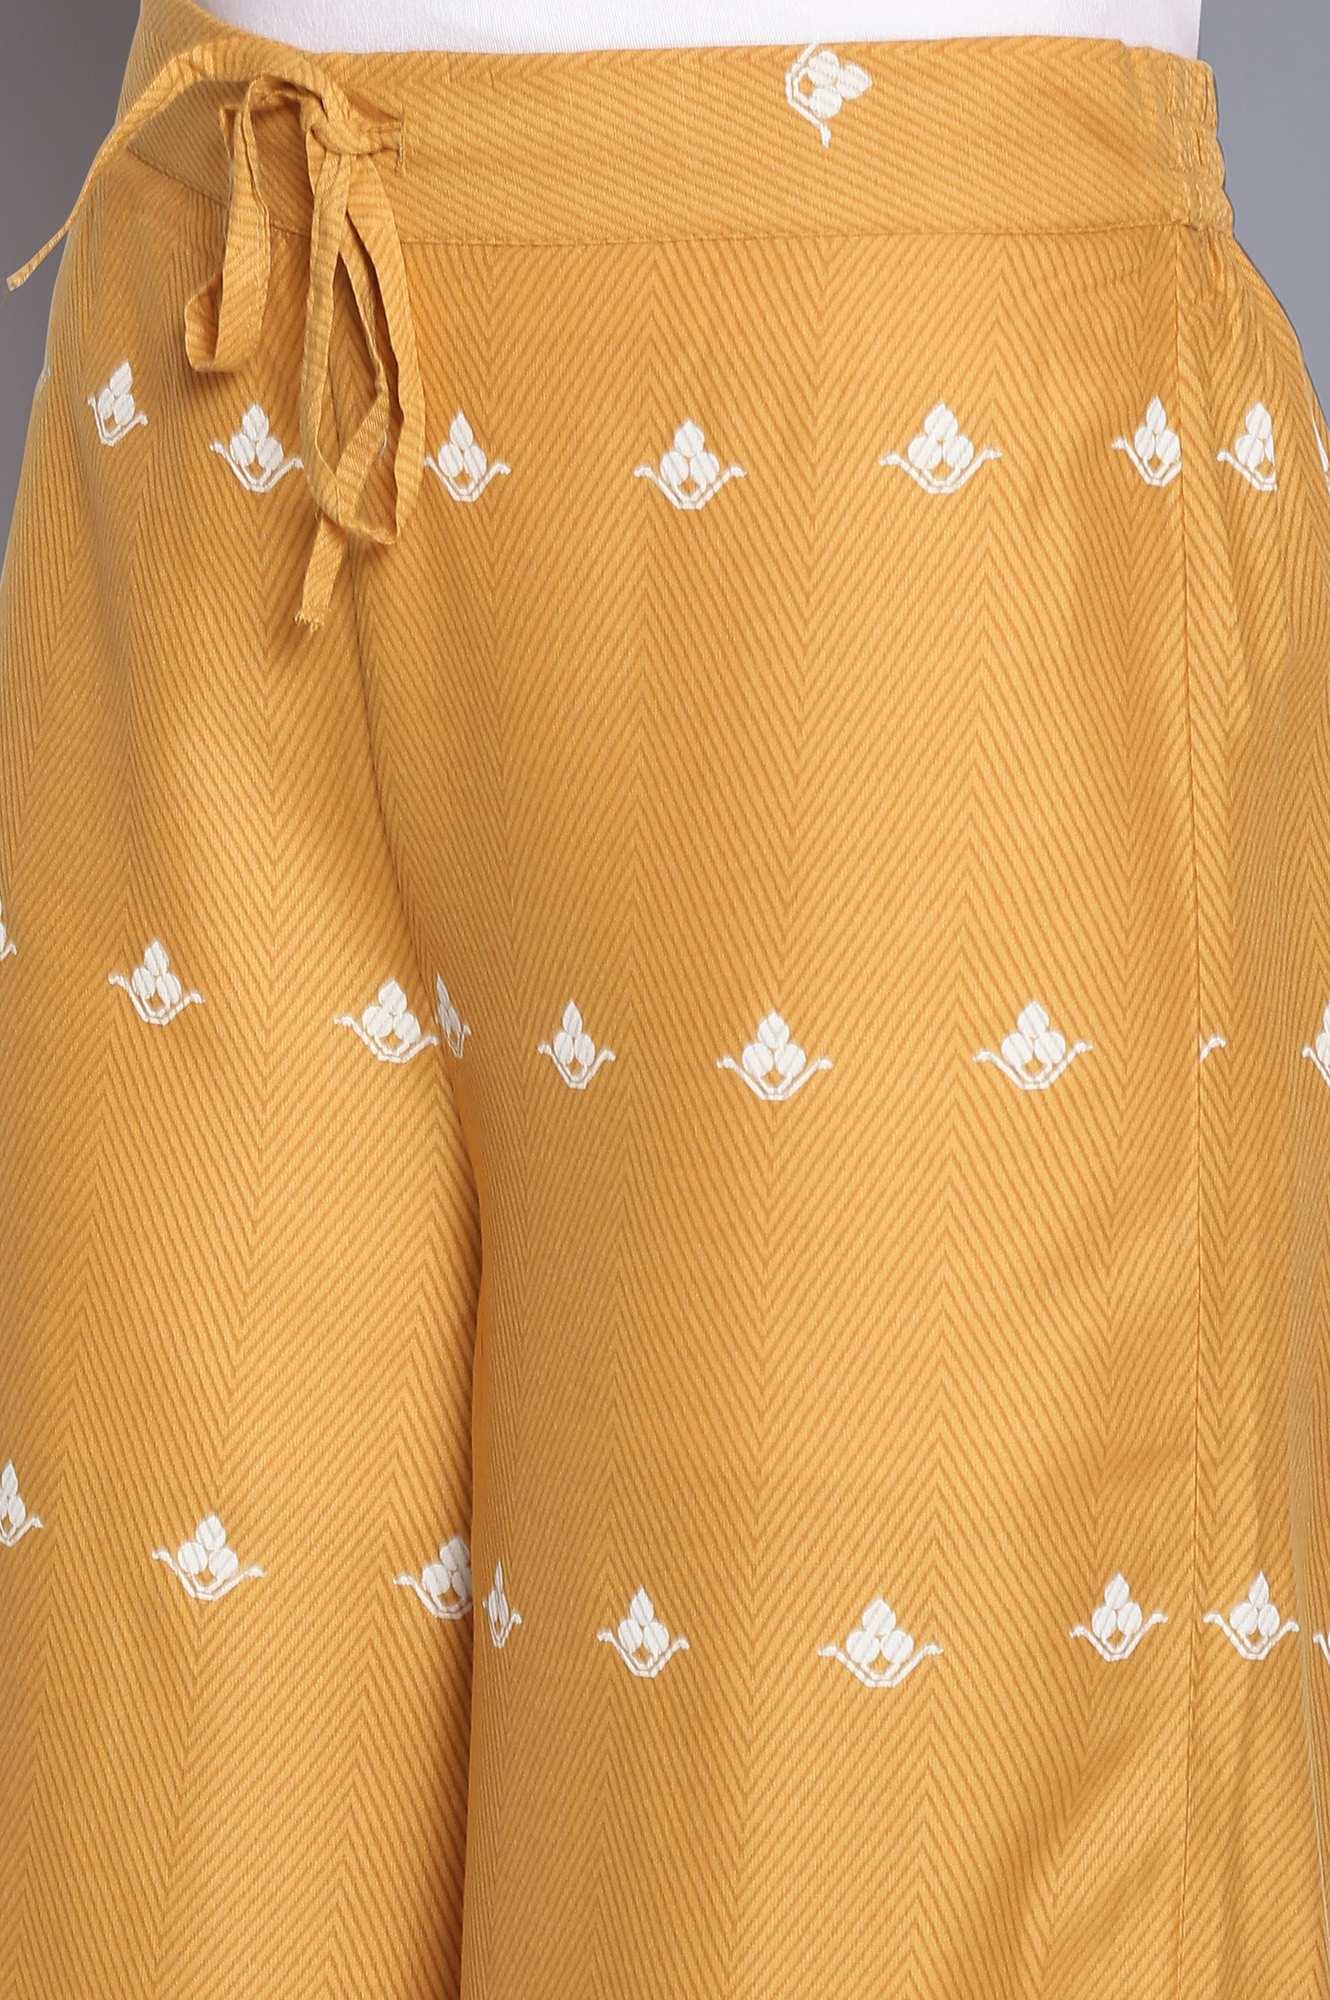 Honeycomb Yellow Printed Parallel Pants - wforwoman